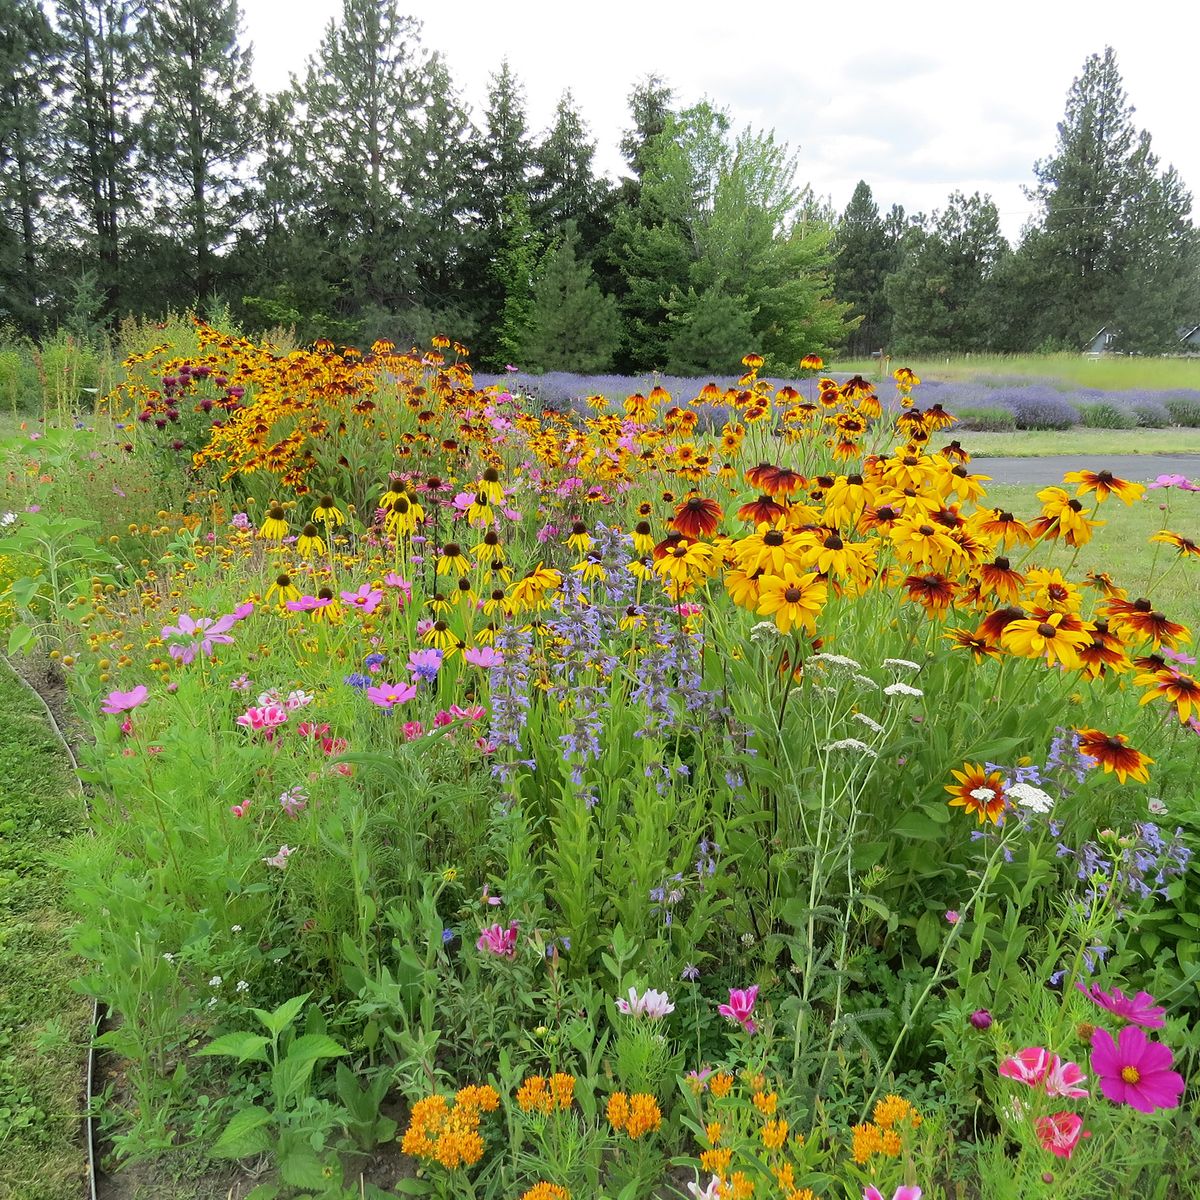 In the Garden: Pollinator garden provides habitat for birds and